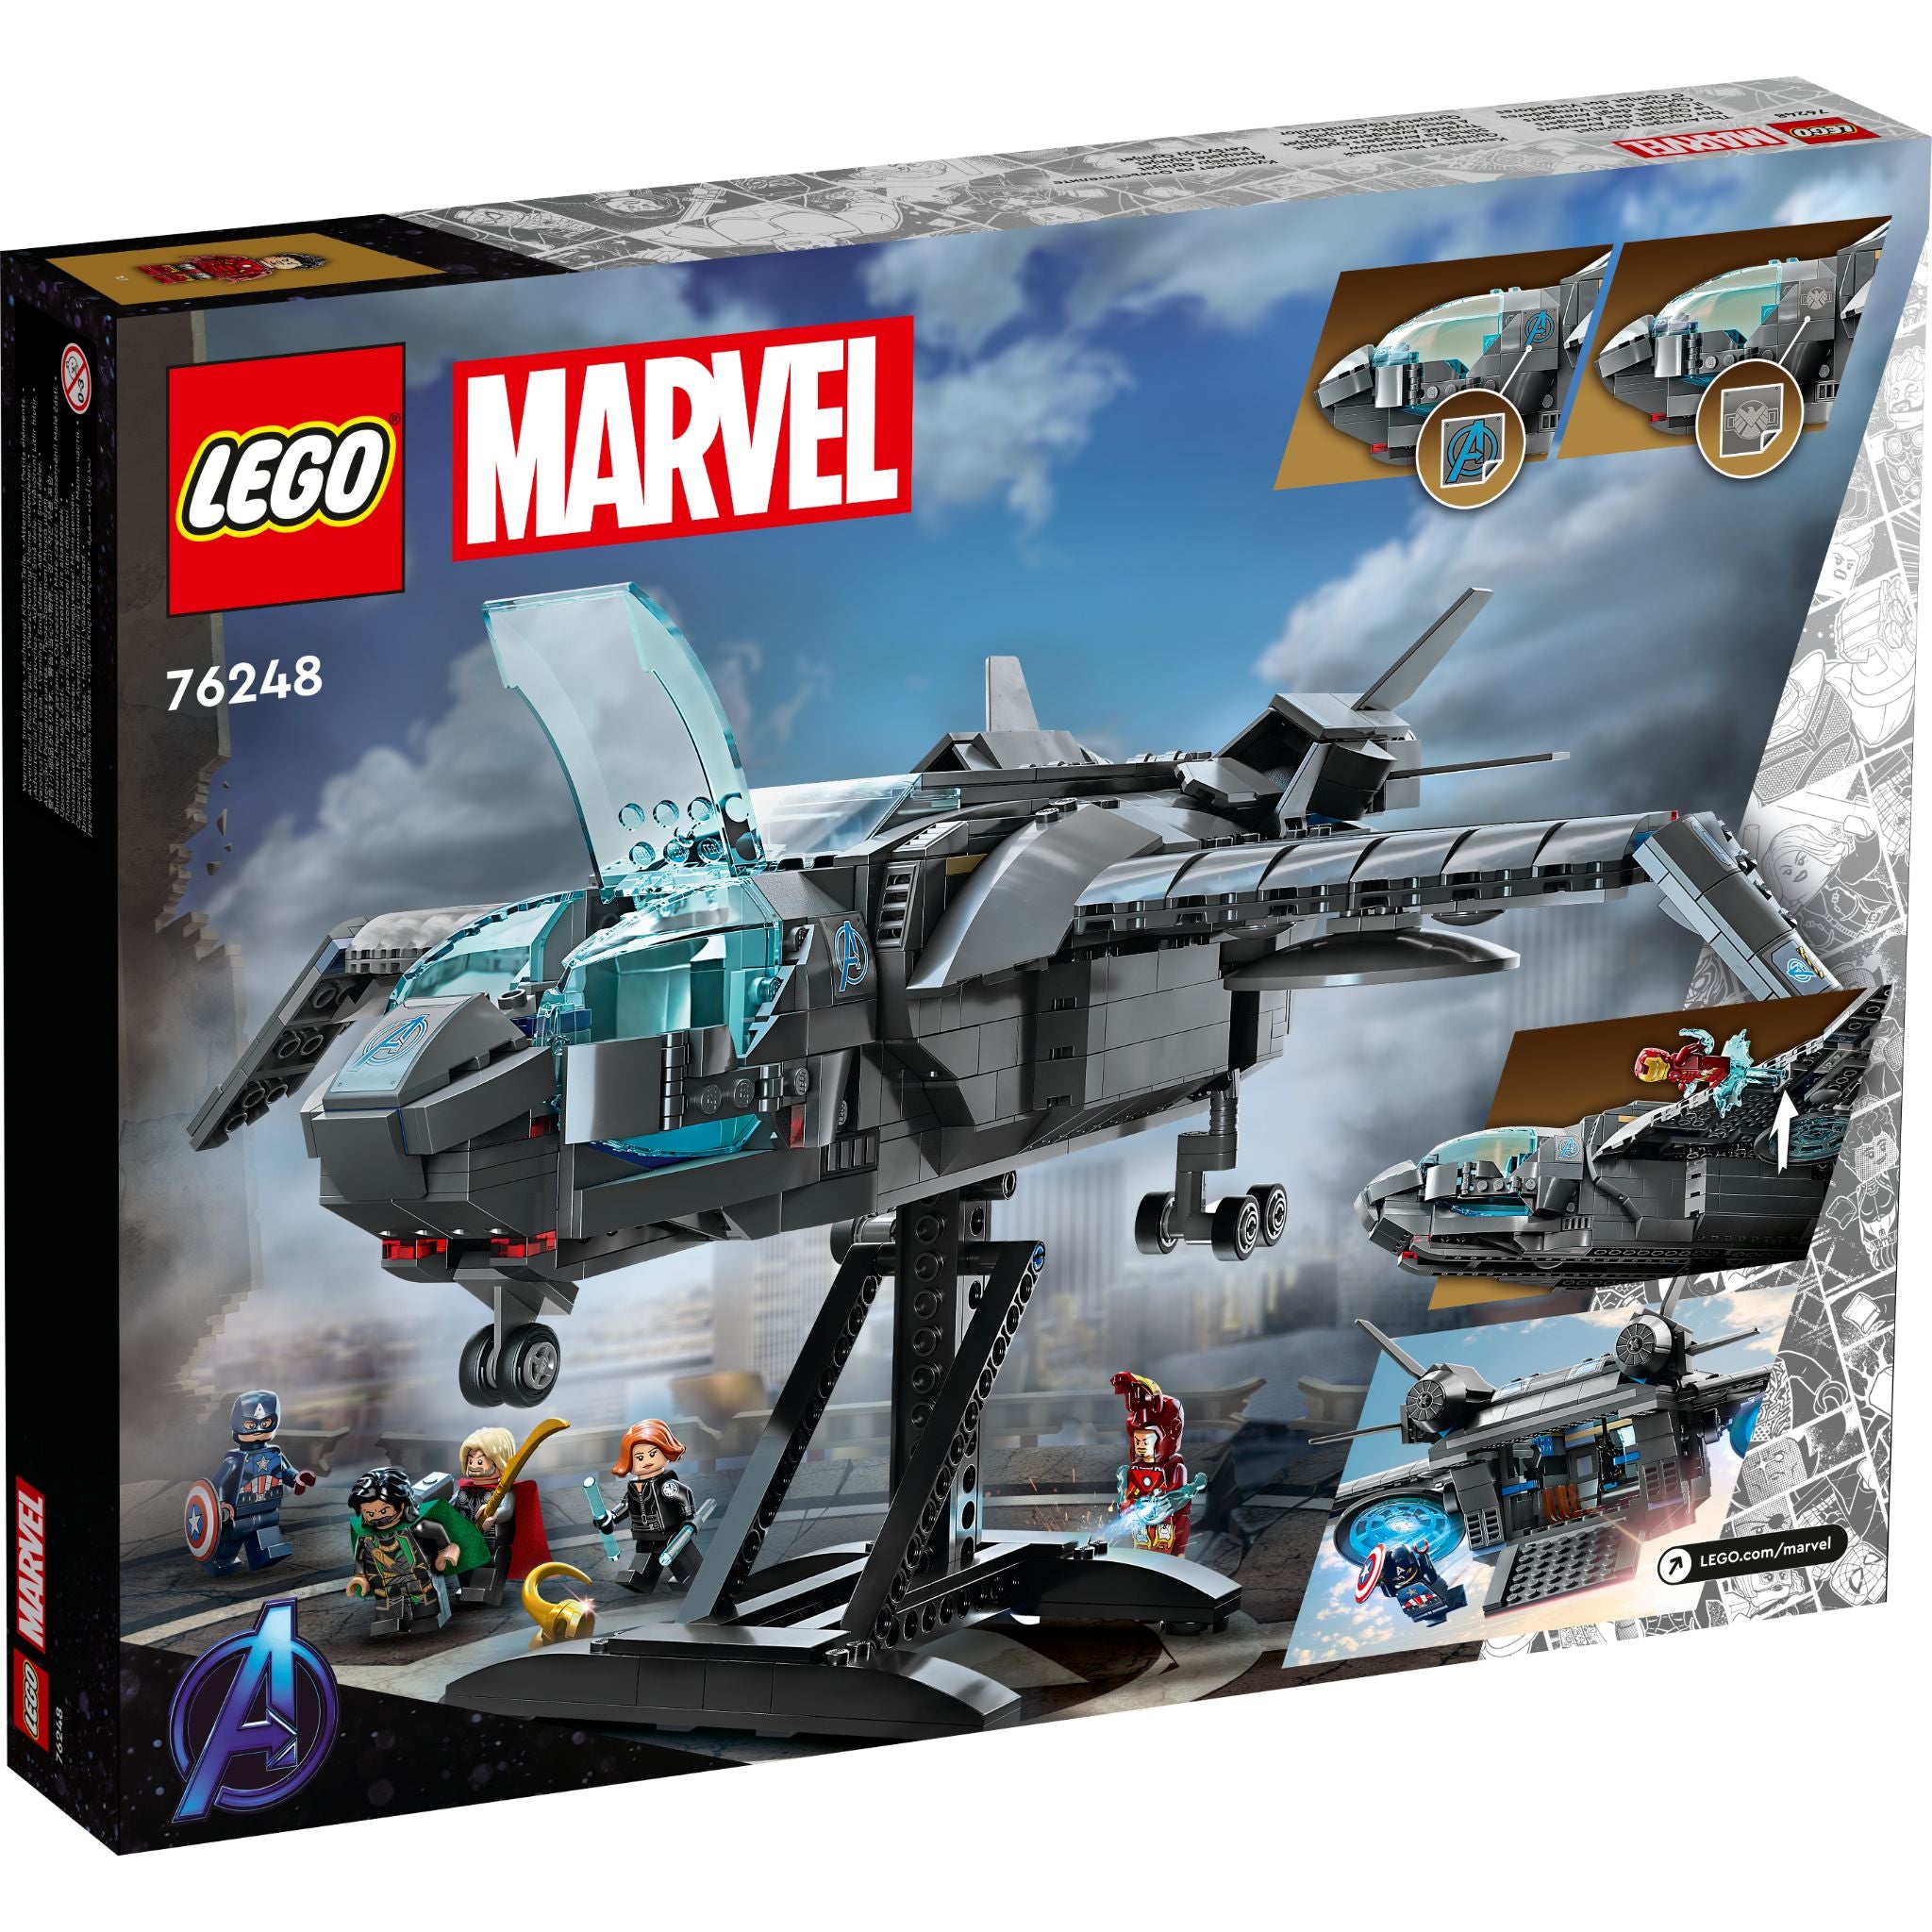 LEGO Super Heroes: The Avengers Quinjet (76248)